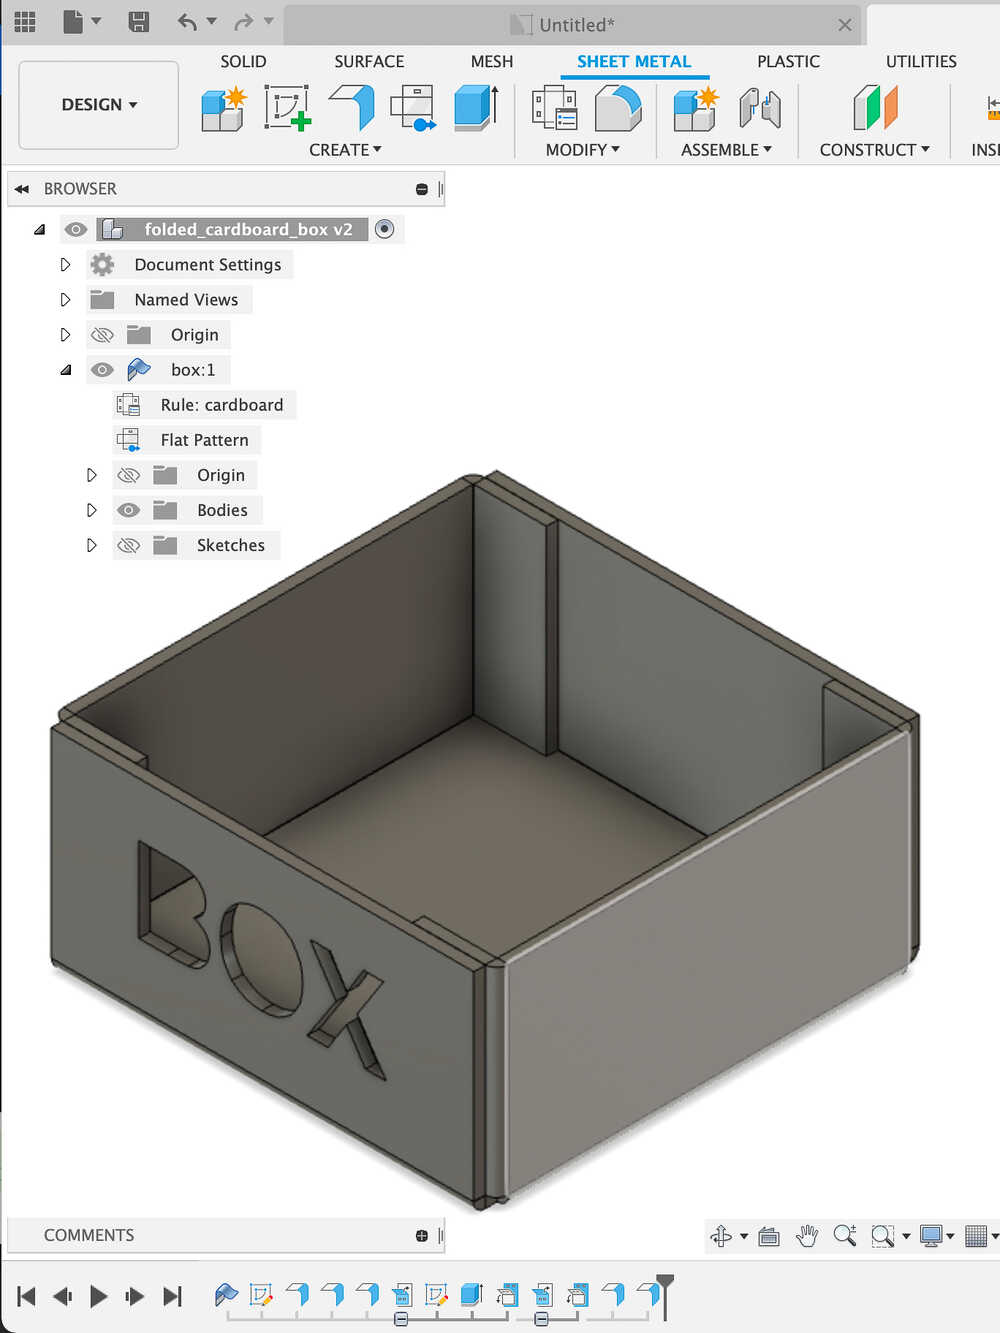 15_W/fusion_cardboard_box.jpg